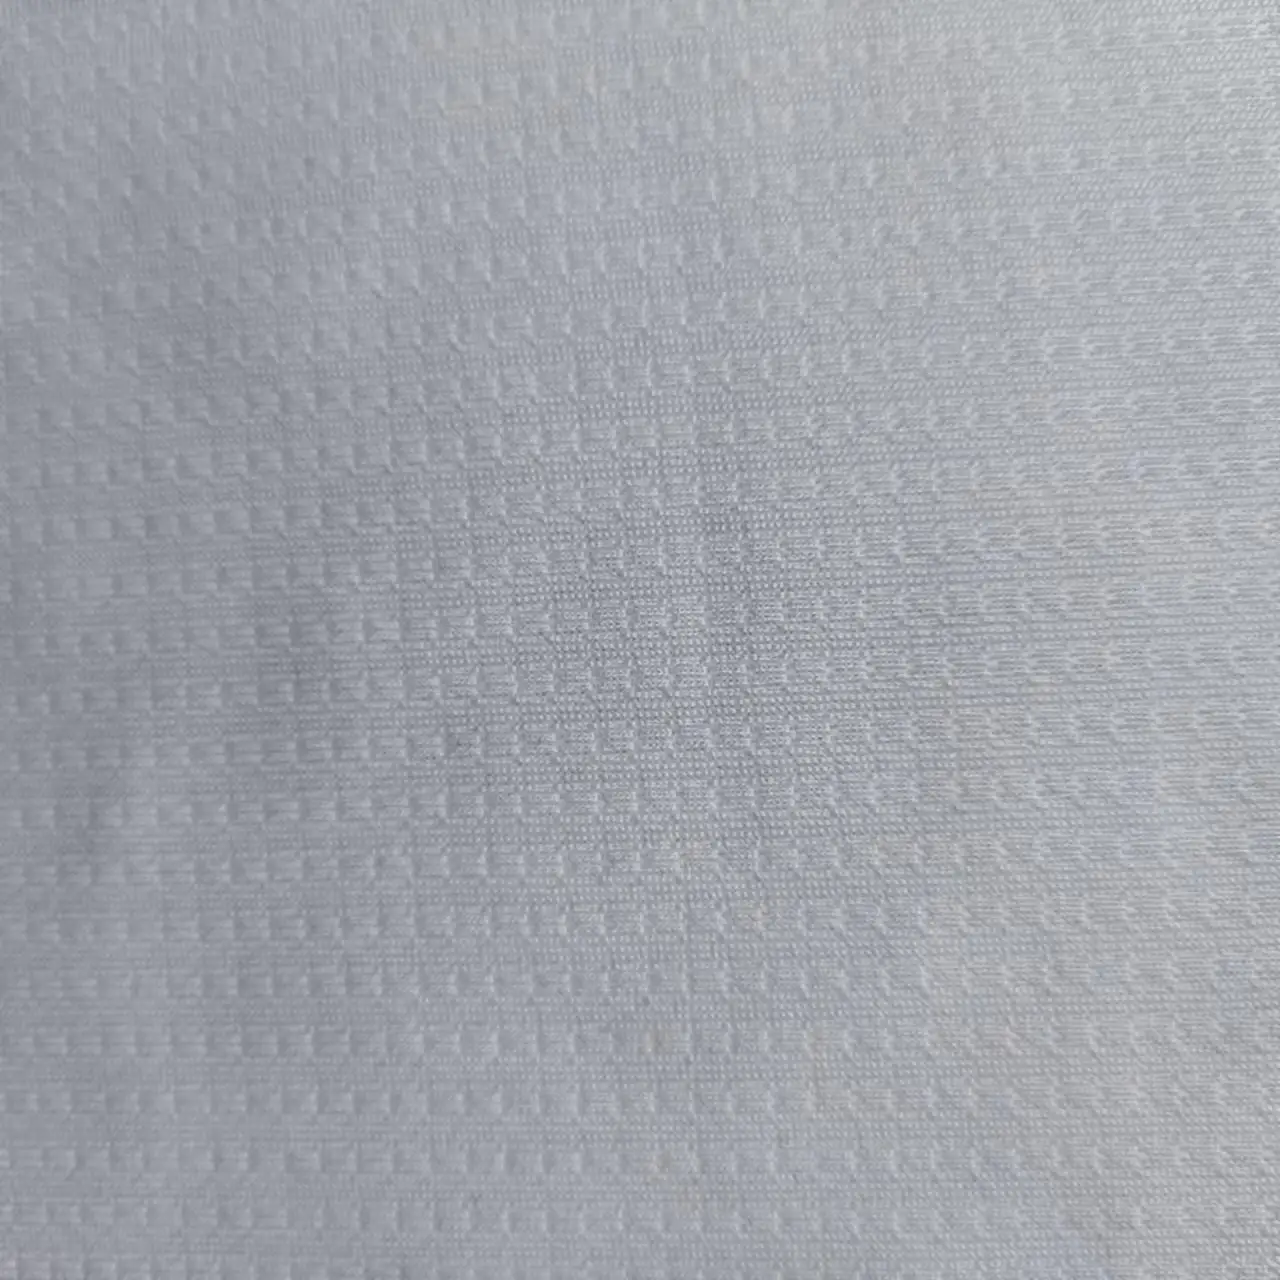 In Lululemon Fabric Spandex Wholesales Recycled 90 Polyester 10 Soft Fashion Pantone Plain Waterproof Anti Stretch Gsm Technics